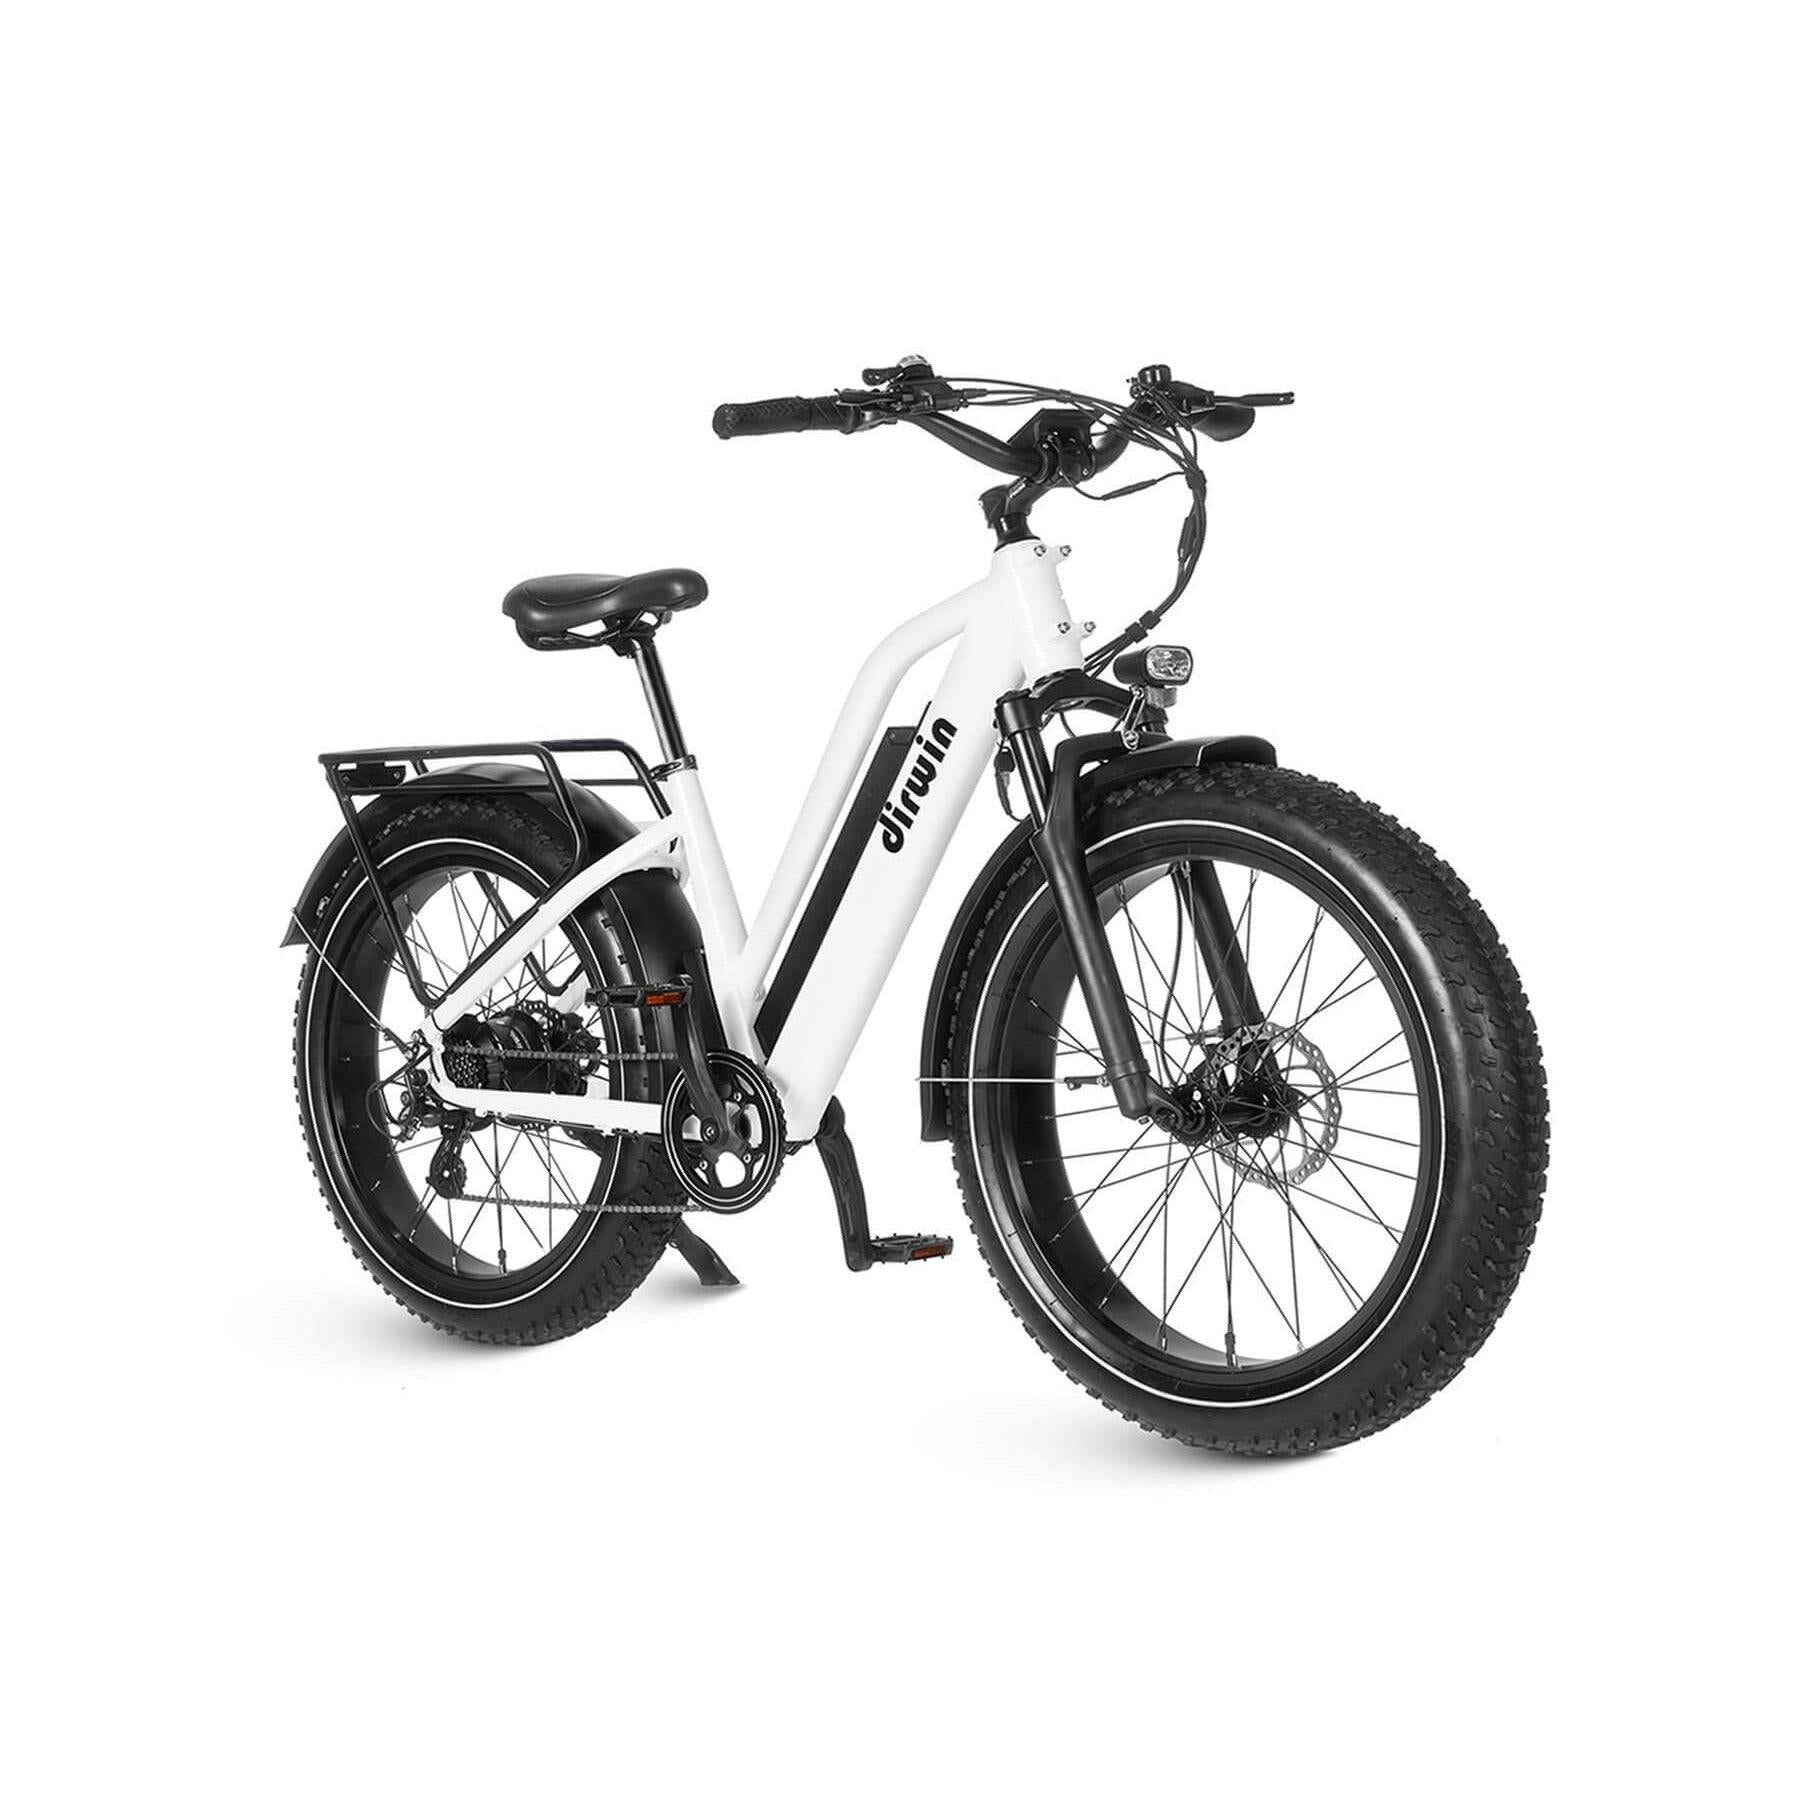 Dirwin-Seeker-750W-Step-Thru-Fat-Tire-Electric-Bike-w-Twist-Throttle-Step-Through-Dirwin-Bike